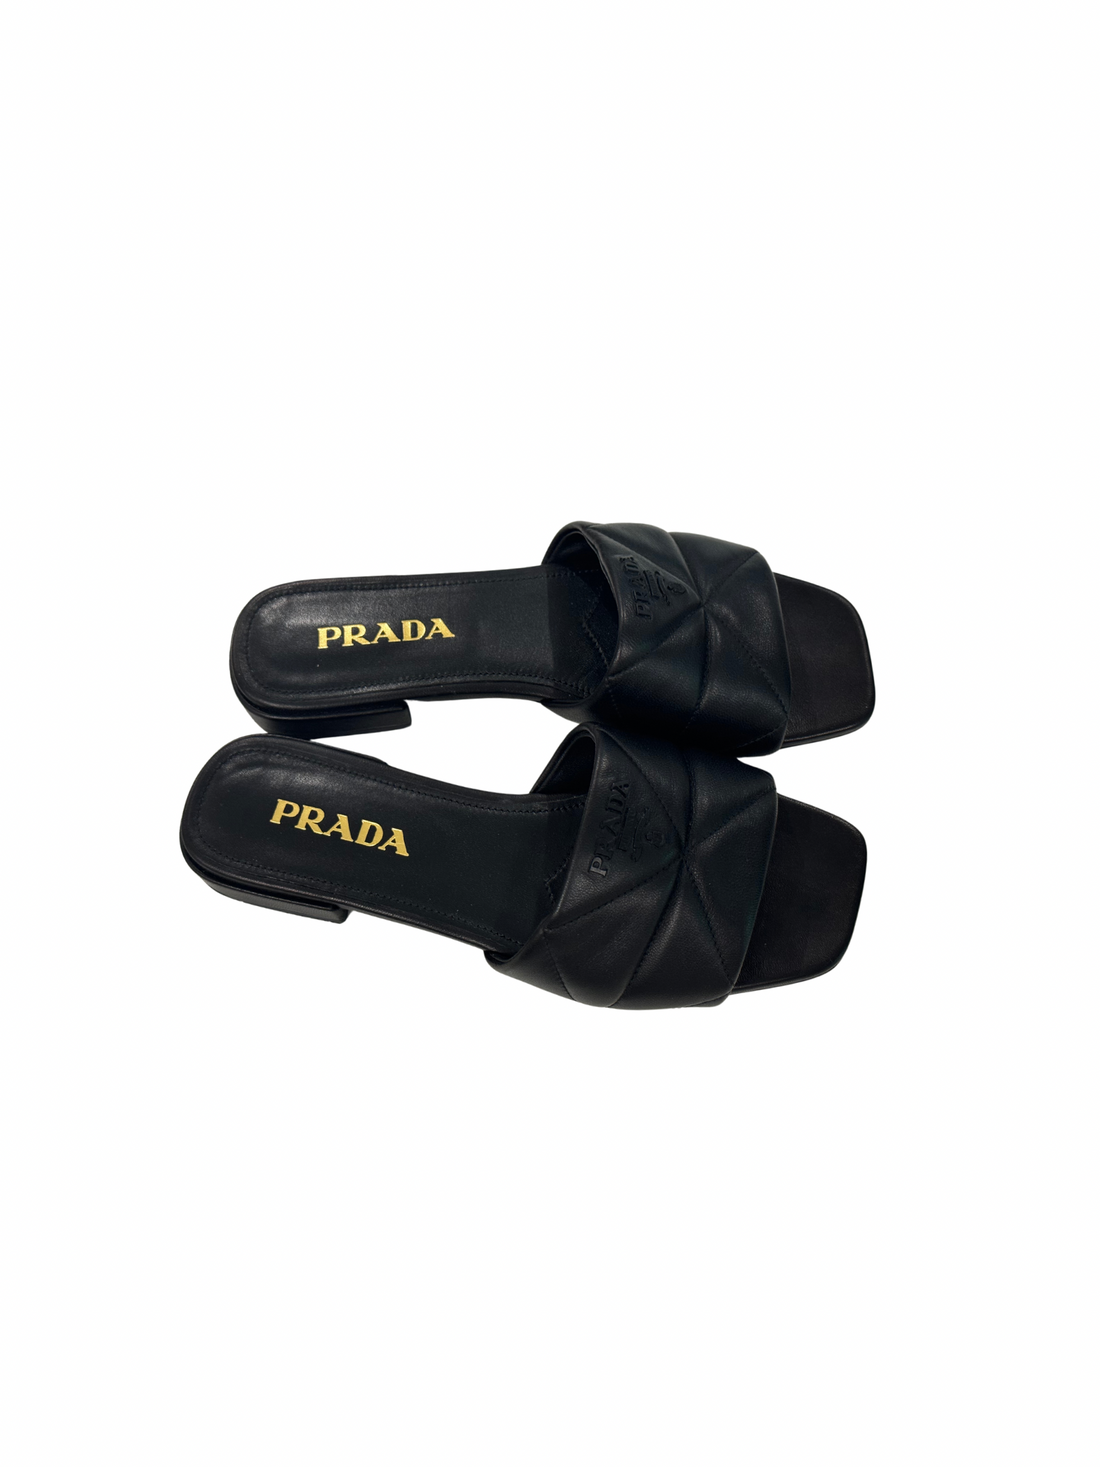 Prada Black Leather Slides- Size 39